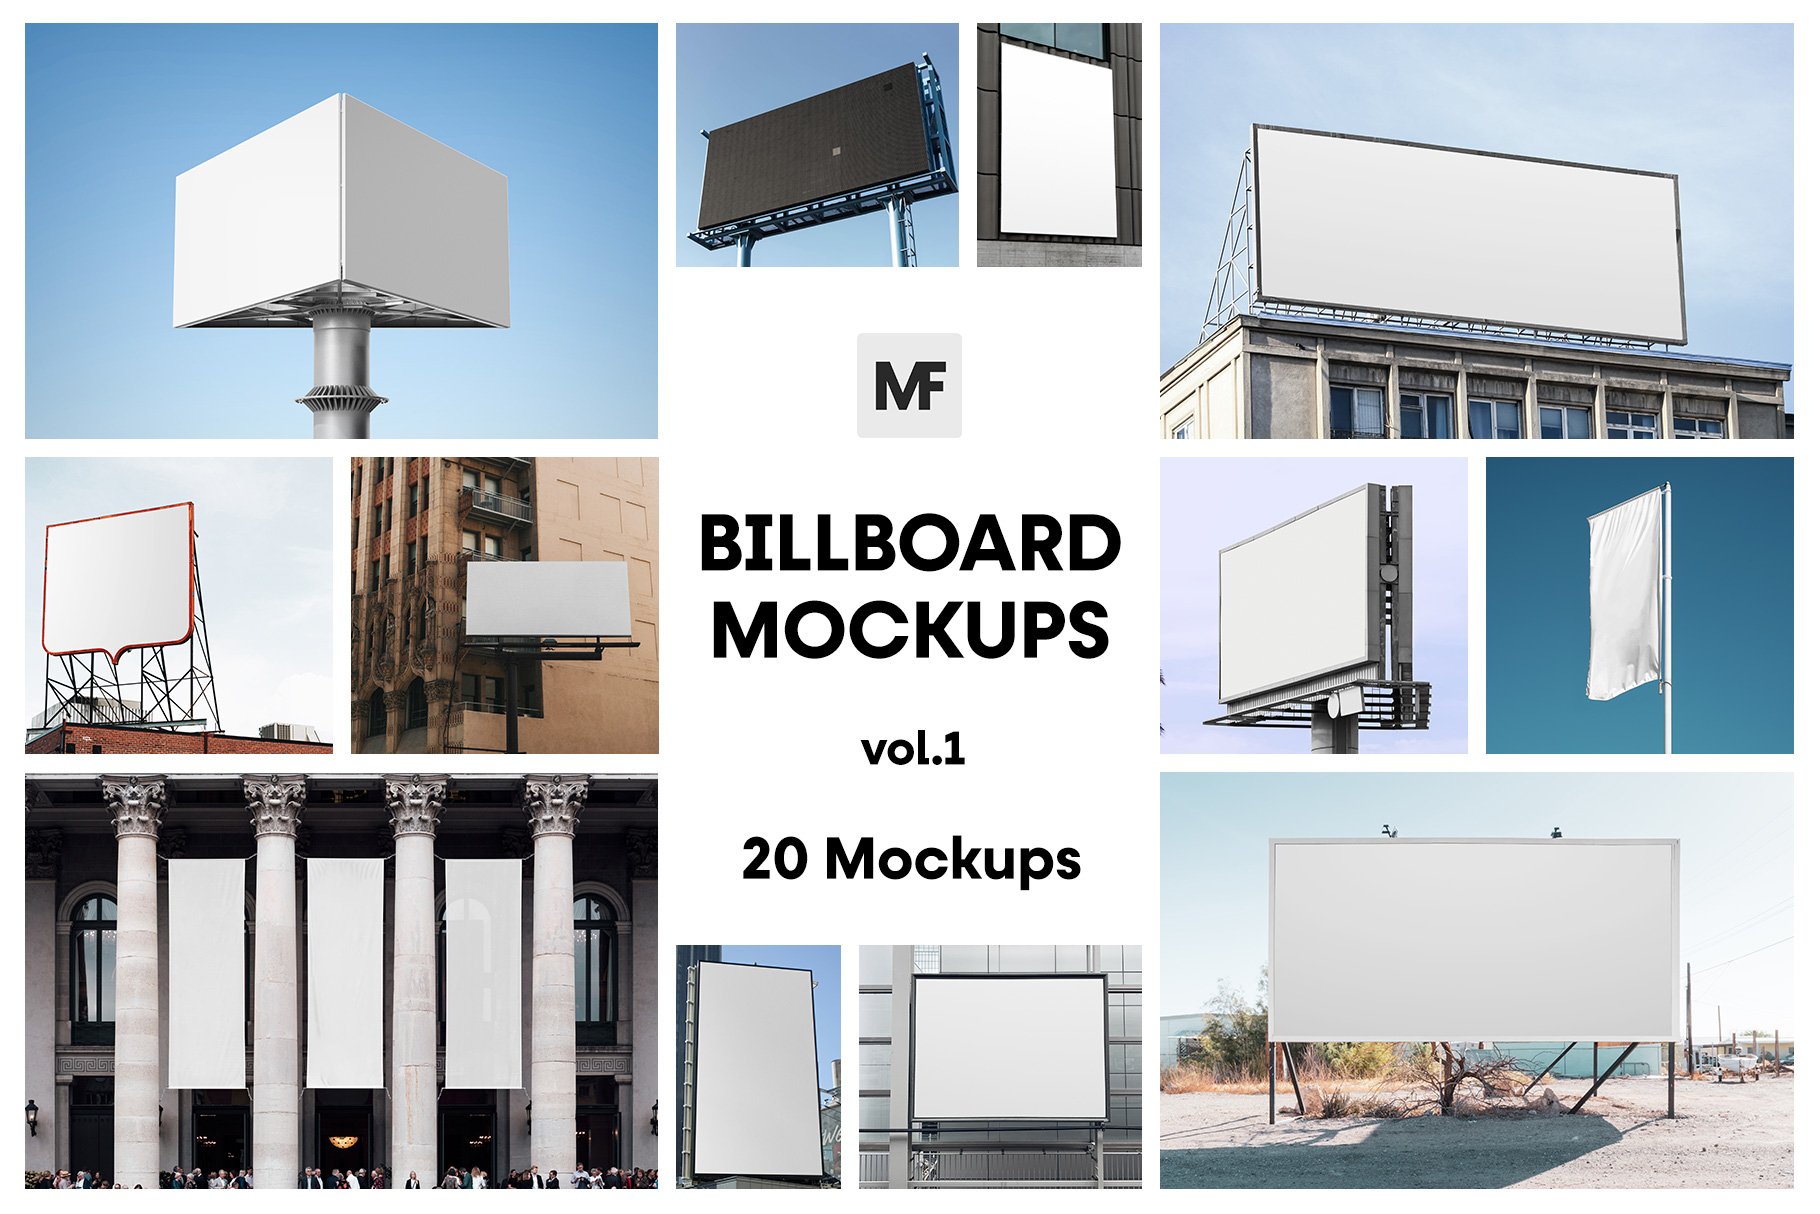 Billboard and Flag Mockups vol.1 cover image.